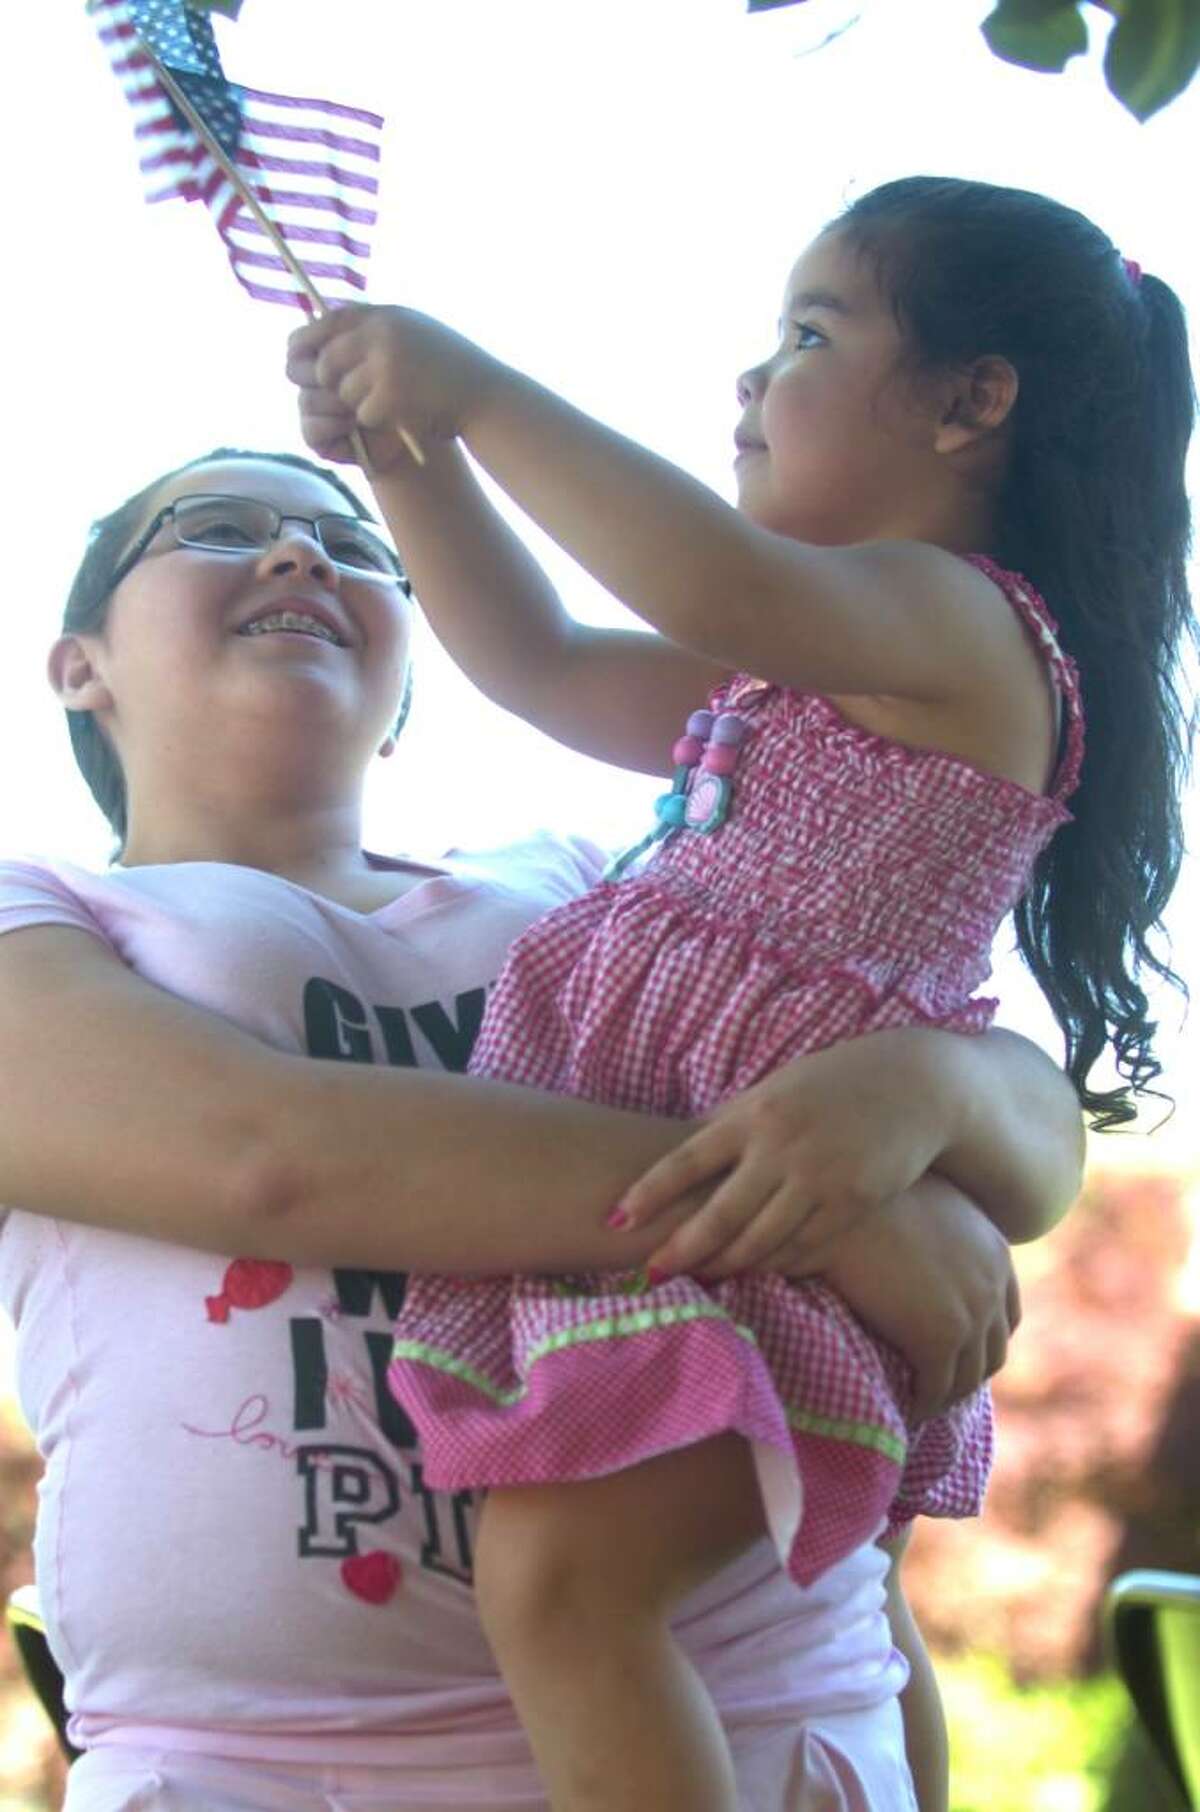 Fernenda Moreno, 12, carries her sister Camila, 3, at the Bryam parade on Sunday, May 30, 2010.